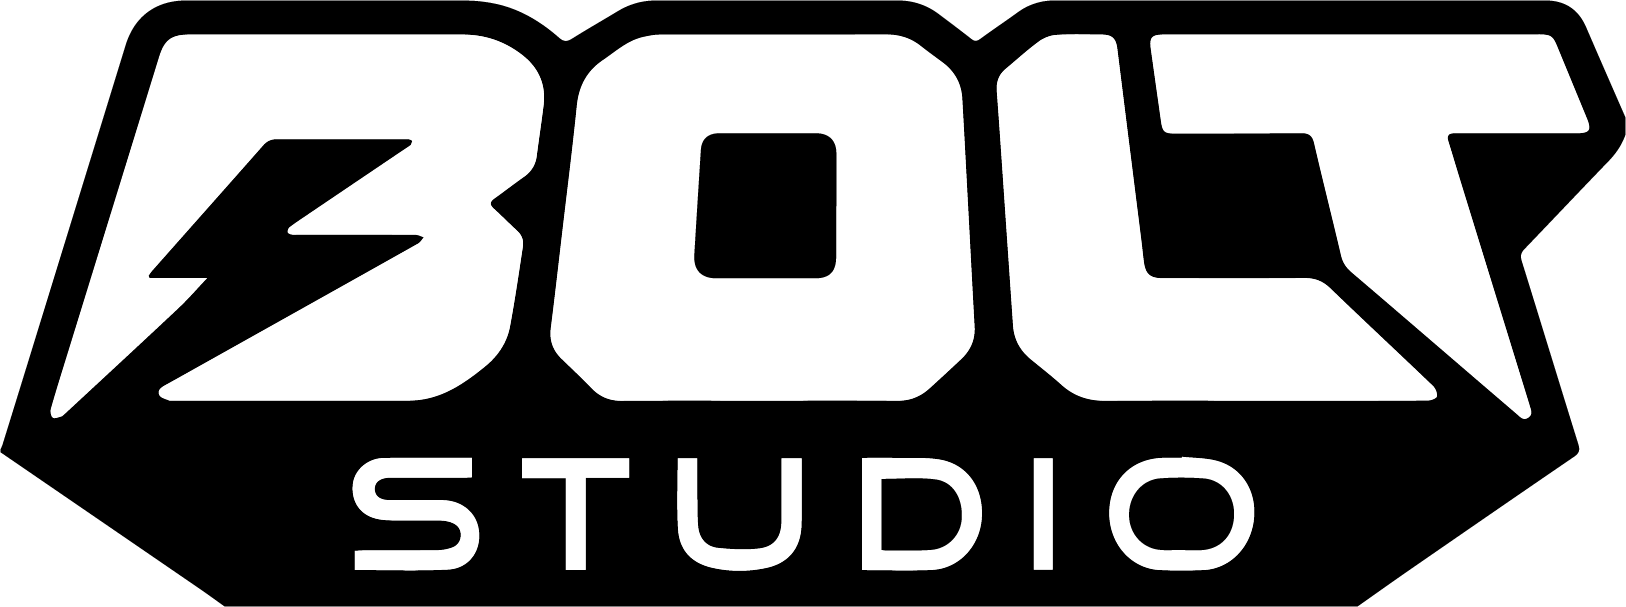 Bolt Studio